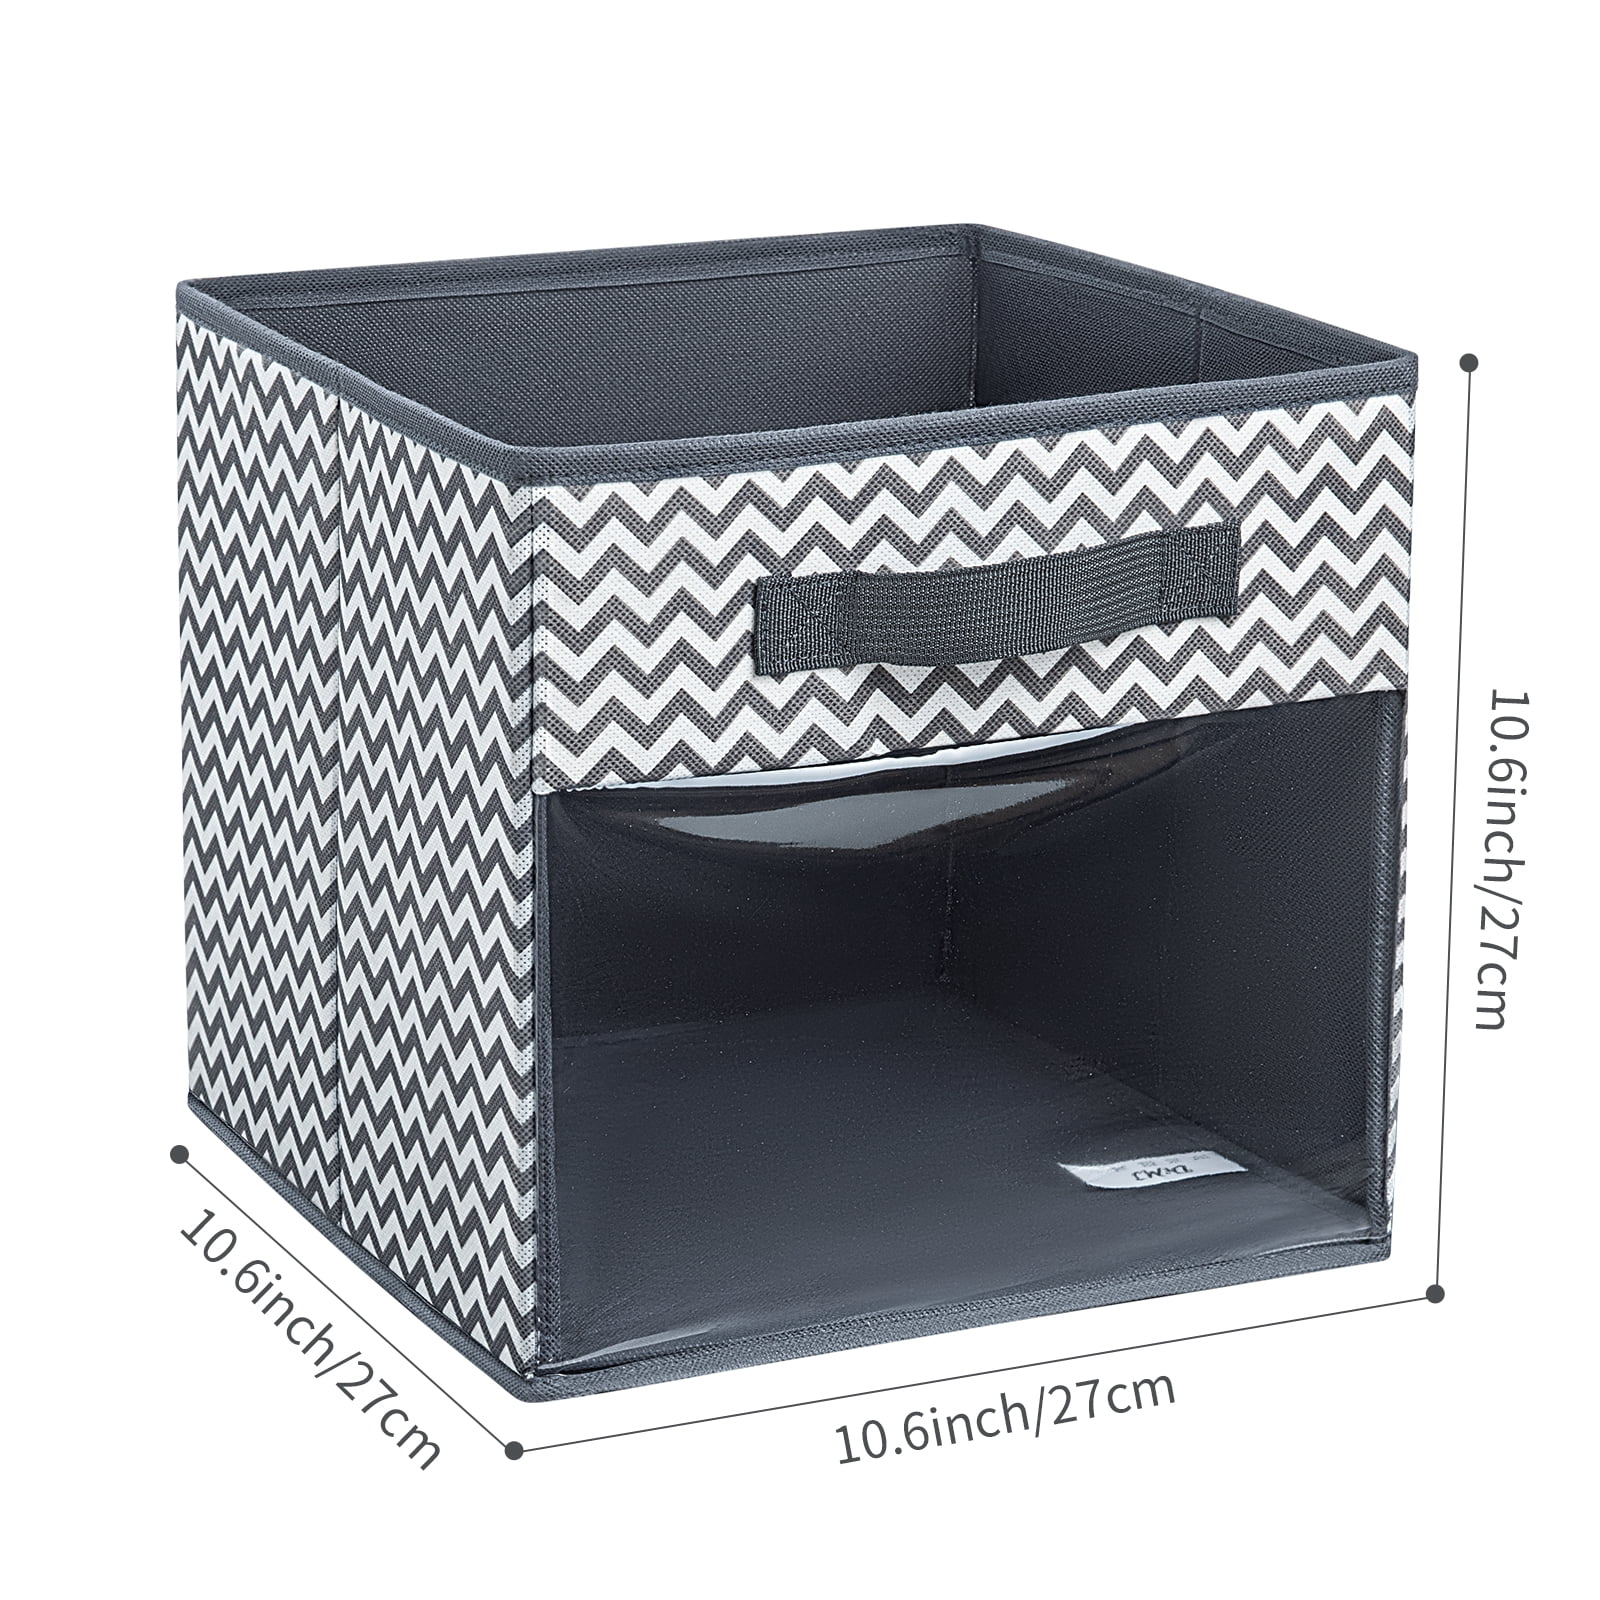 DIMJ Cube Storage Bins, 3 Pcs 11 inch Foldable Fabric Storage Bin Organizer with Clear Window for Bedroom Kids Room Wardrobe Closet Shelves, Home